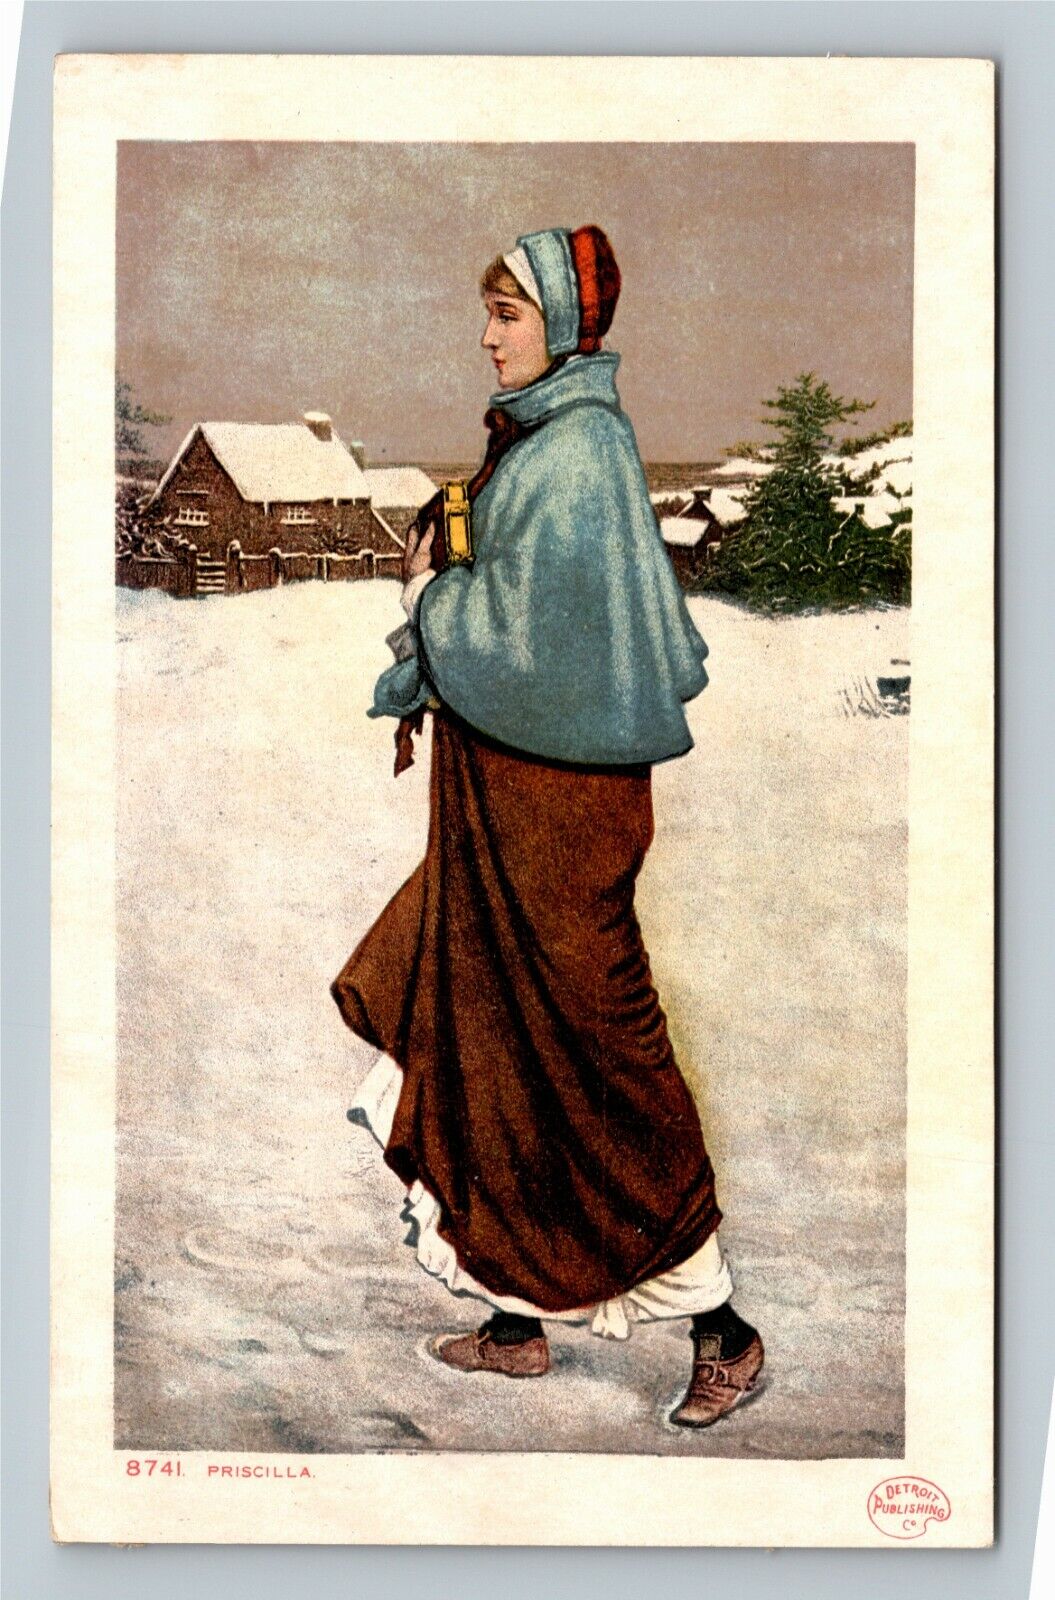 Priscilla, Girl Walking Through Snow, Vintage Postcard